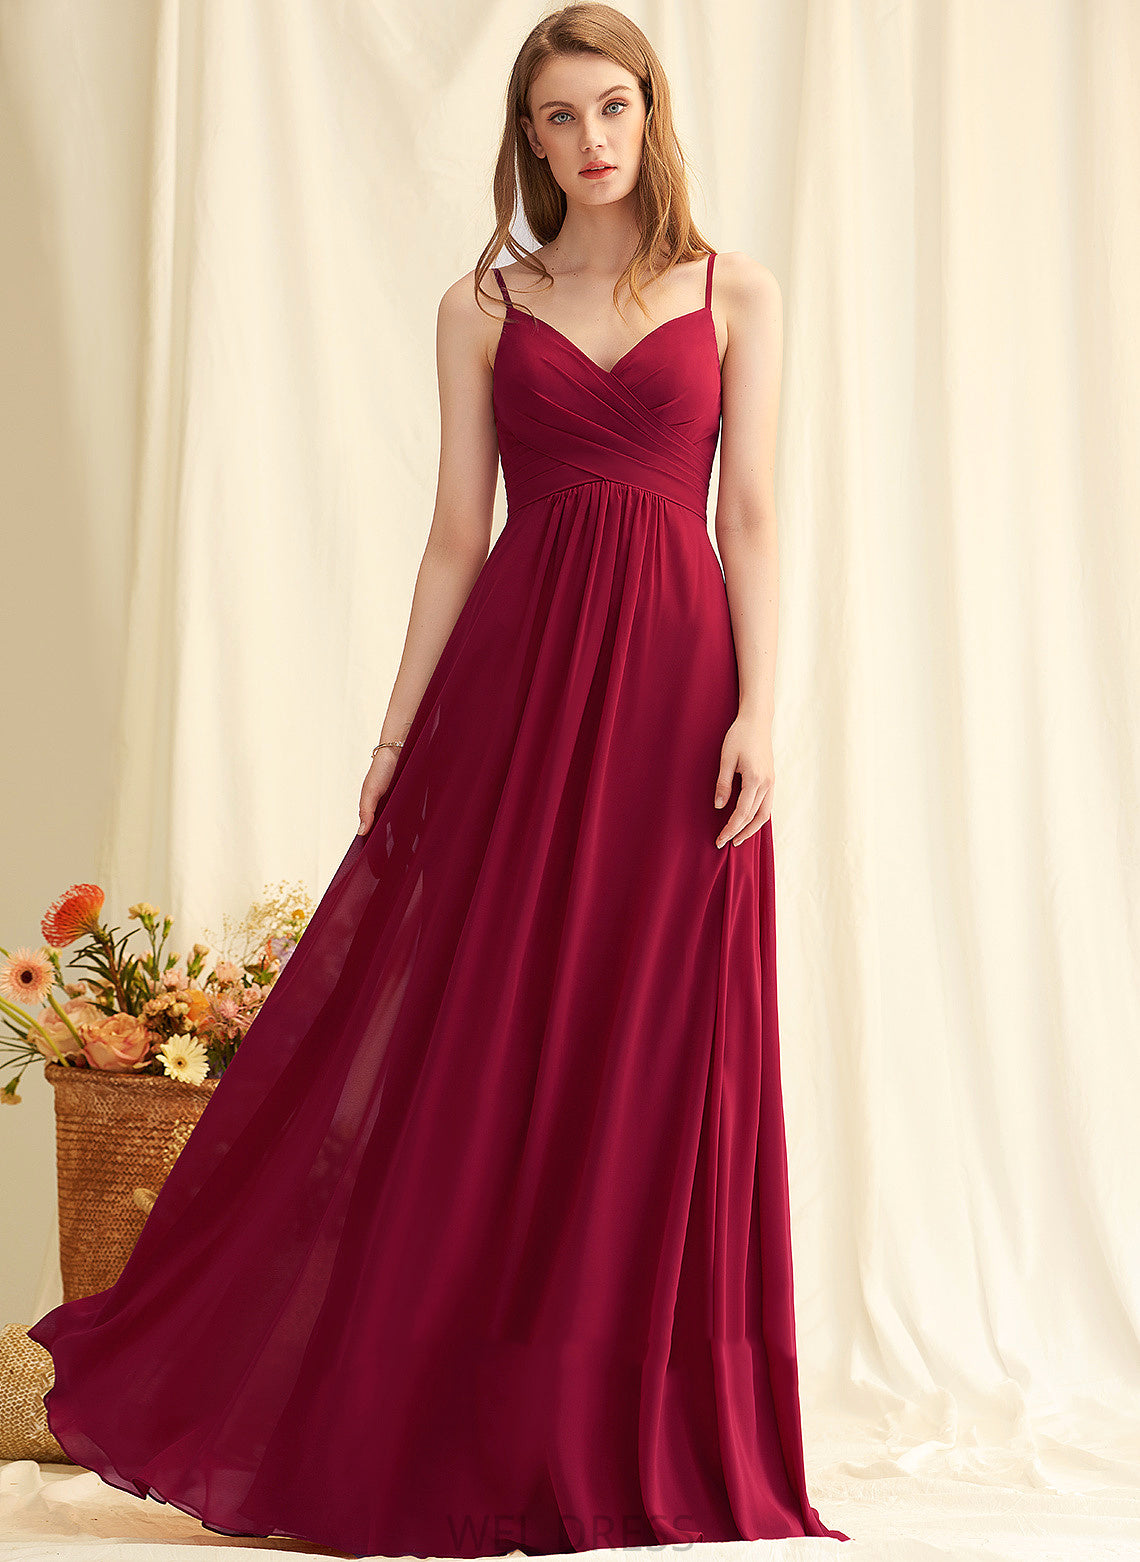 V-neck Neckline A-Line Fabric Silhouette Floor-Length Length Embellishment Ruffle Kallie Sleeveless Natural Waist Bridesmaid Dresses